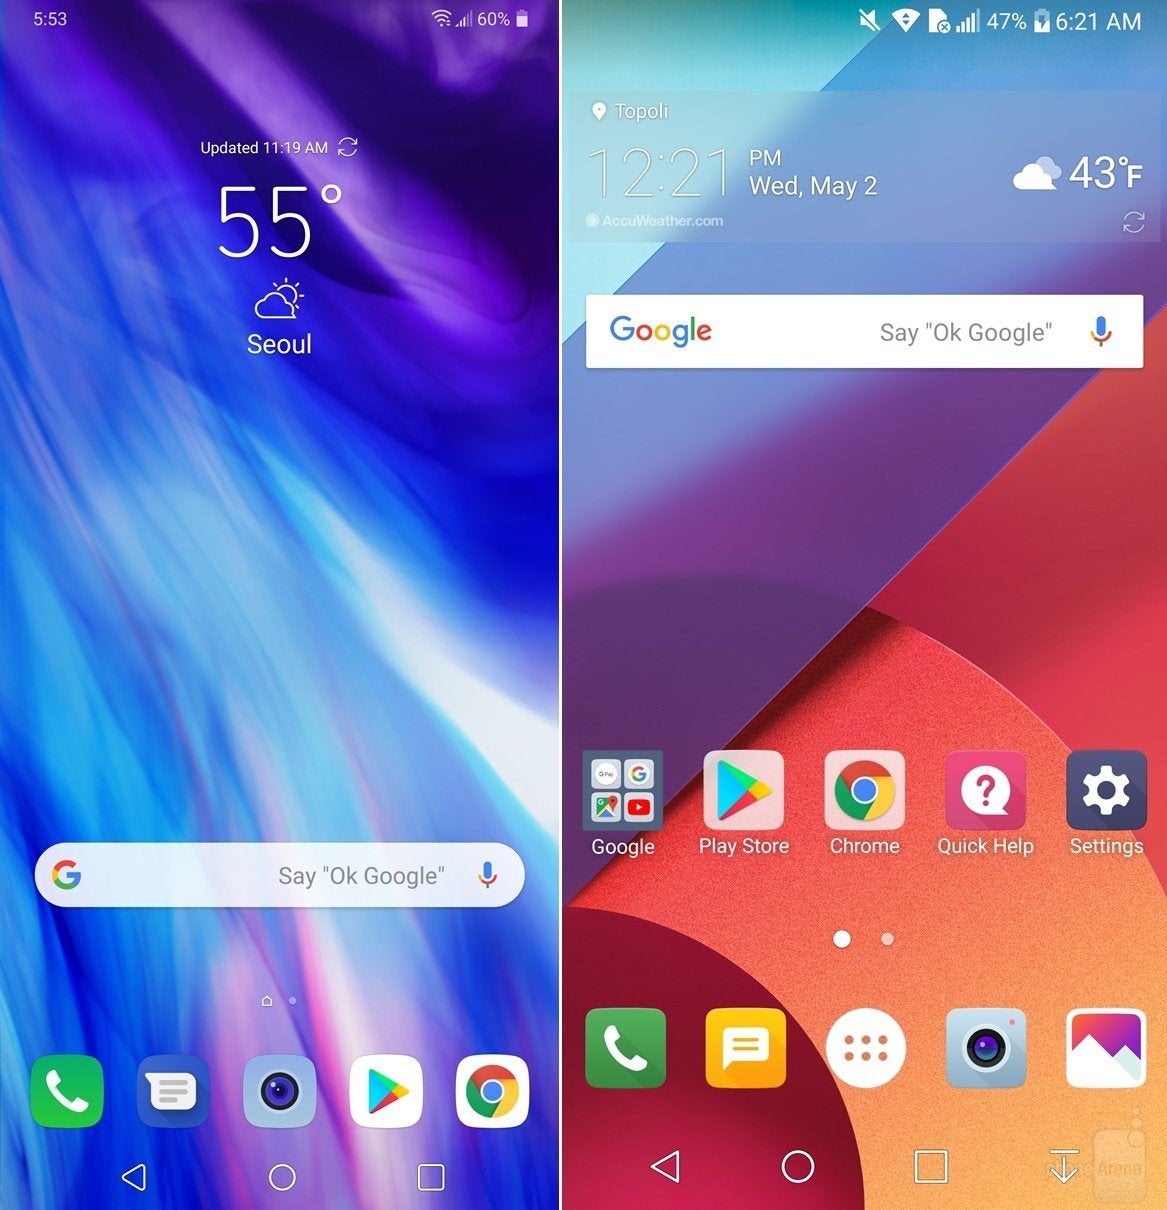 LG G7 ThinQ (left) vs LG G6 (right) - LG G7 UI comparison vs LG G6: A walkthrough of the interface